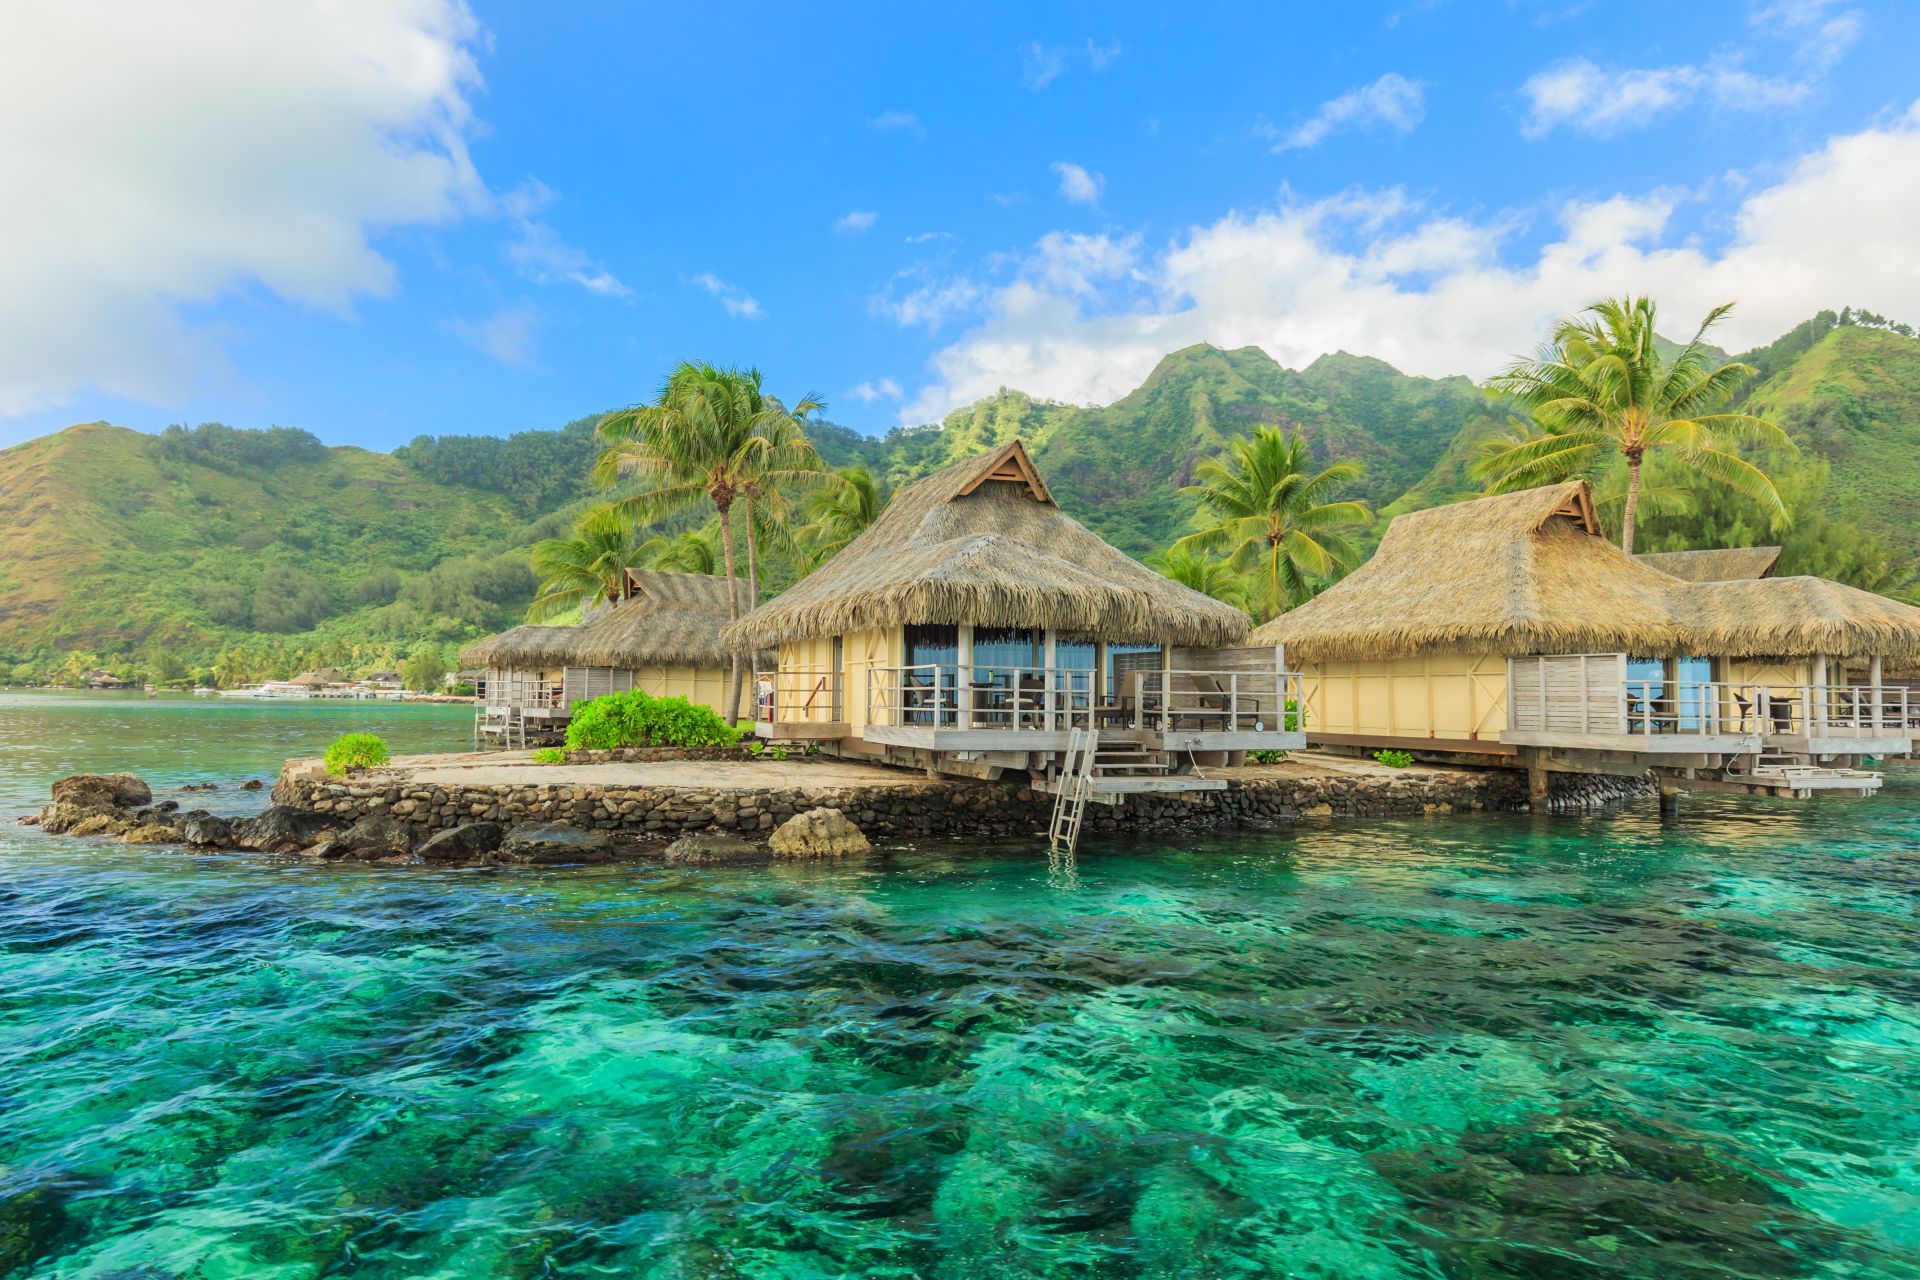 The beautiful sea and resort on the island of Moorea in Tahiti